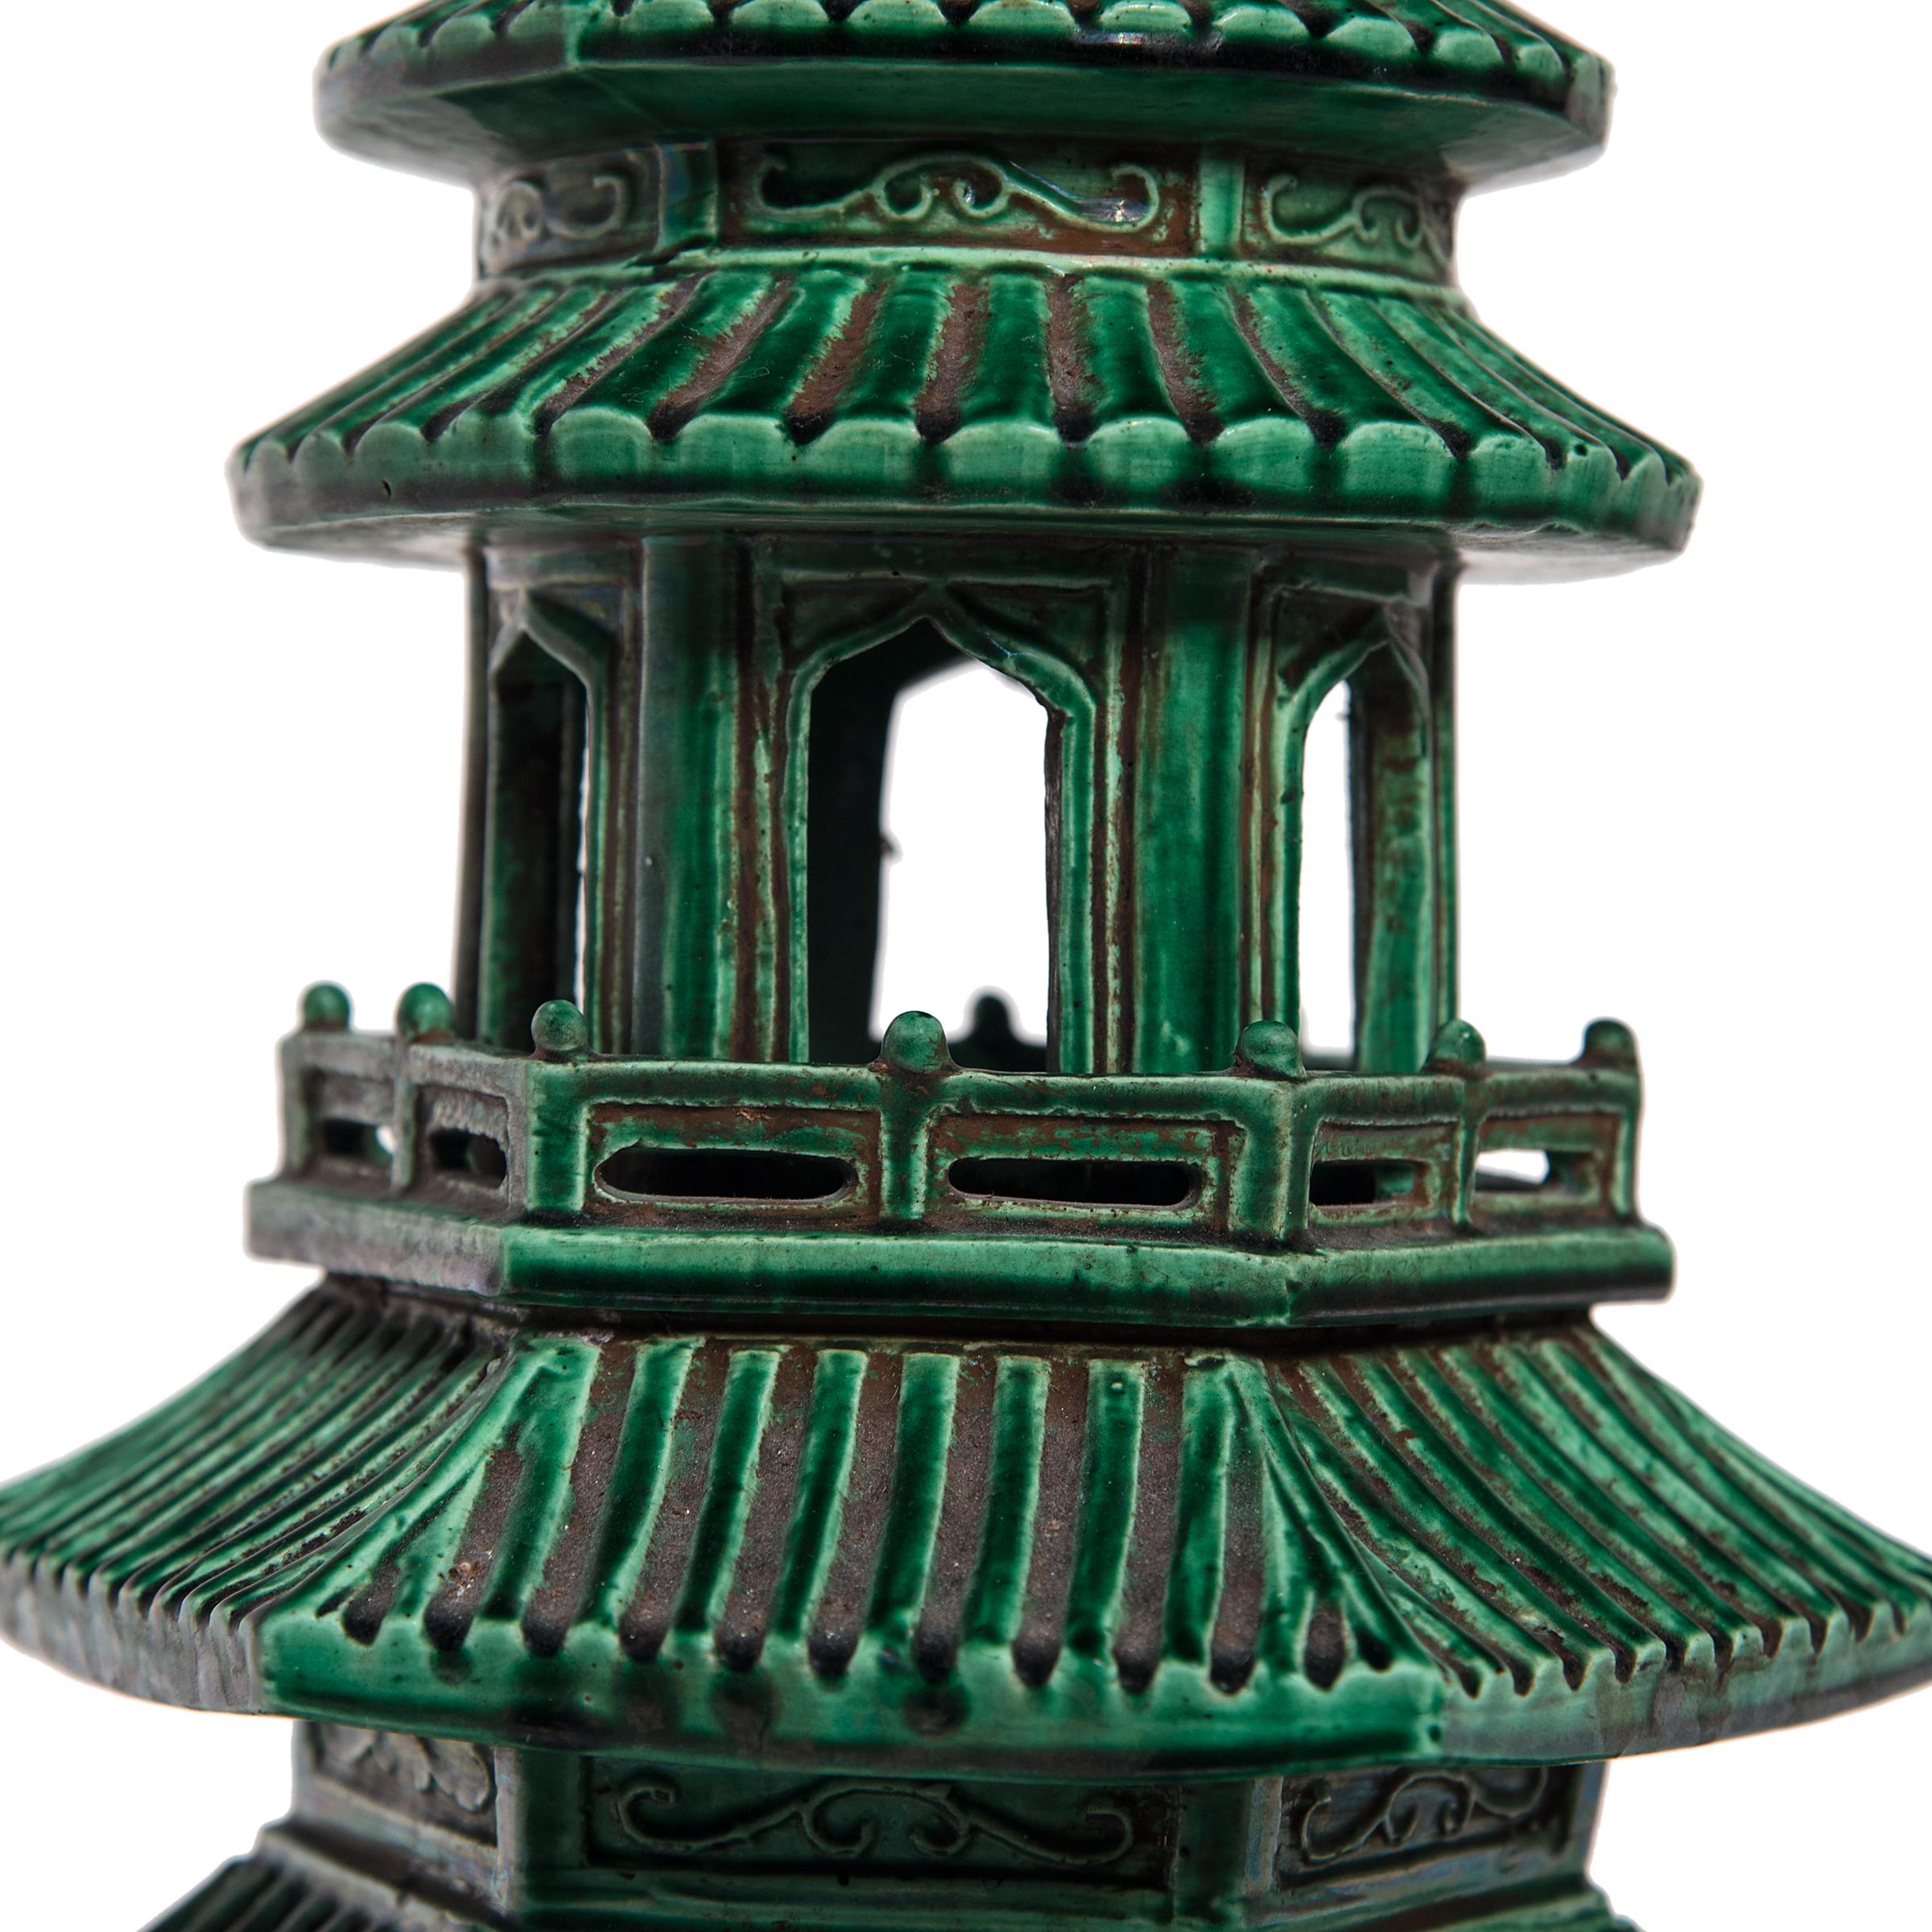 Ceramic Green Glazed Chinese Pagoda Censer